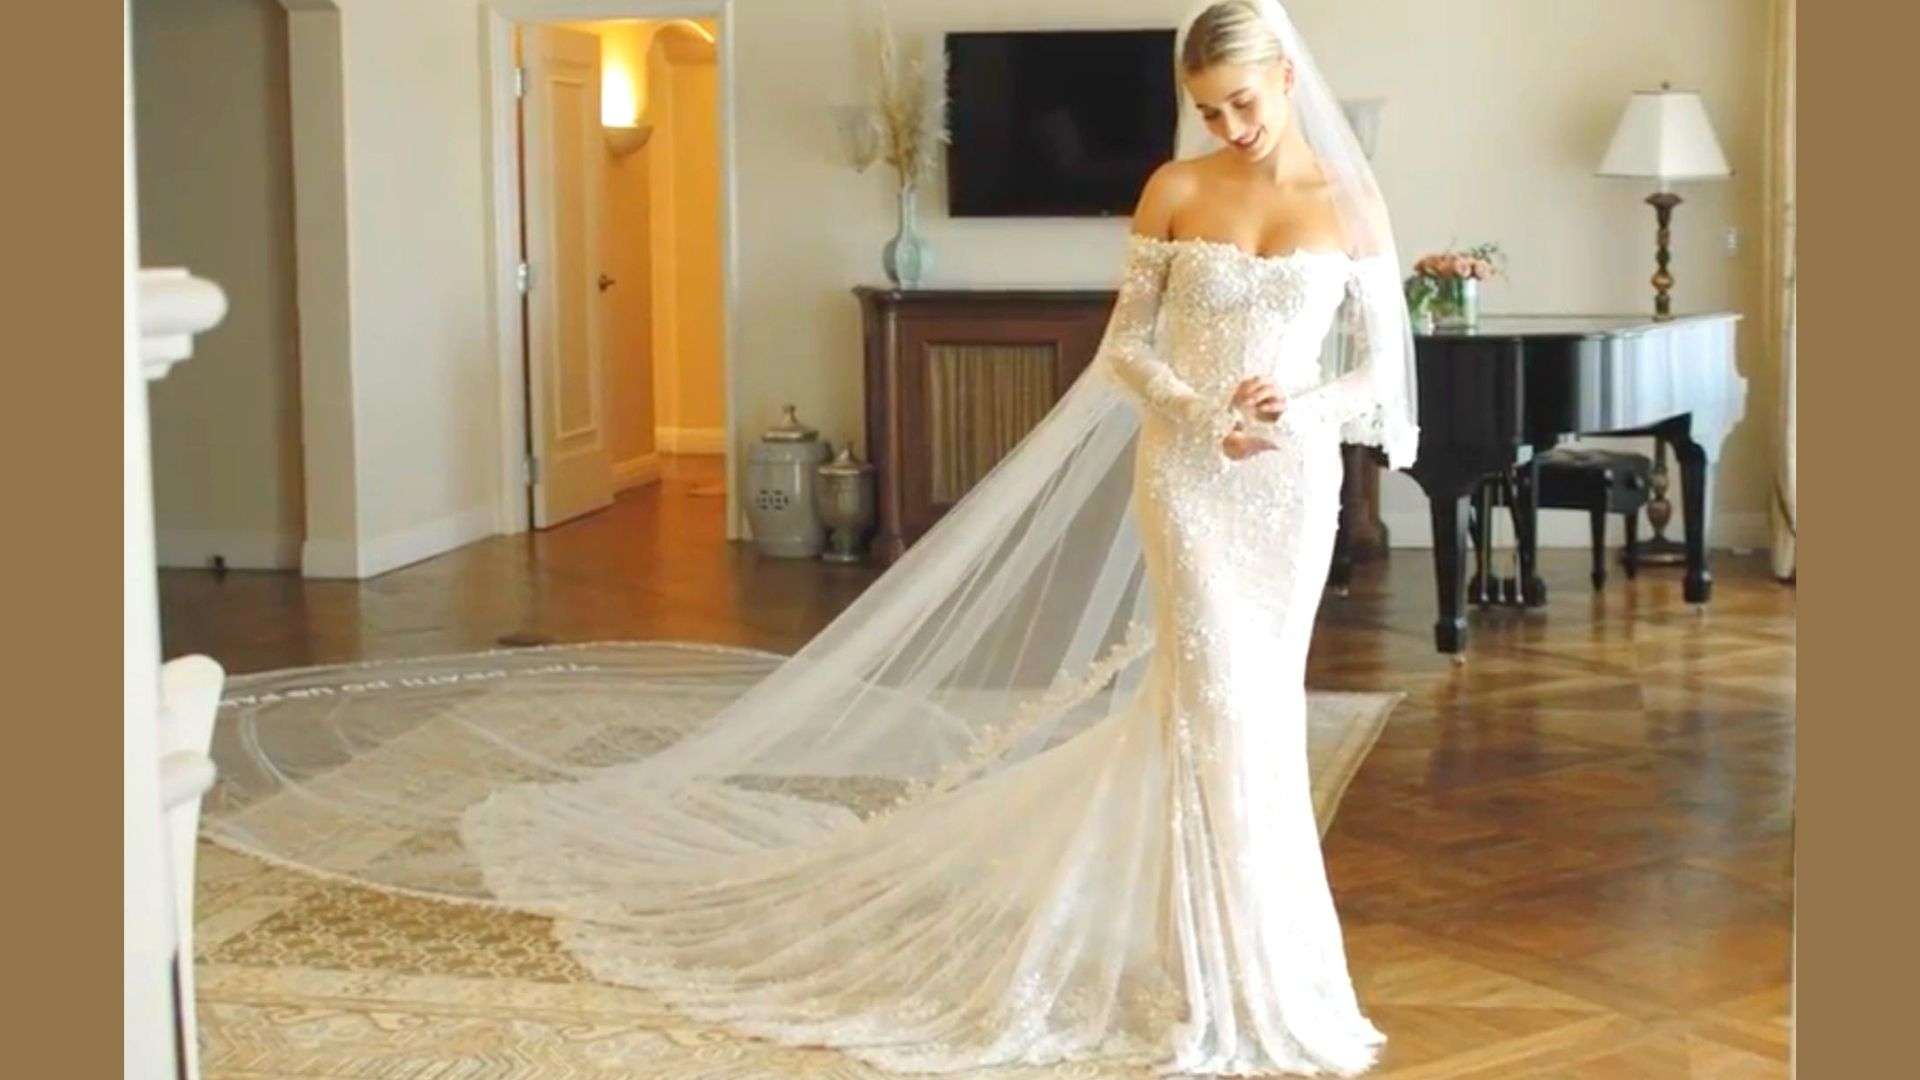 Hailey Bieber Wedding Dress Wallpaper and images